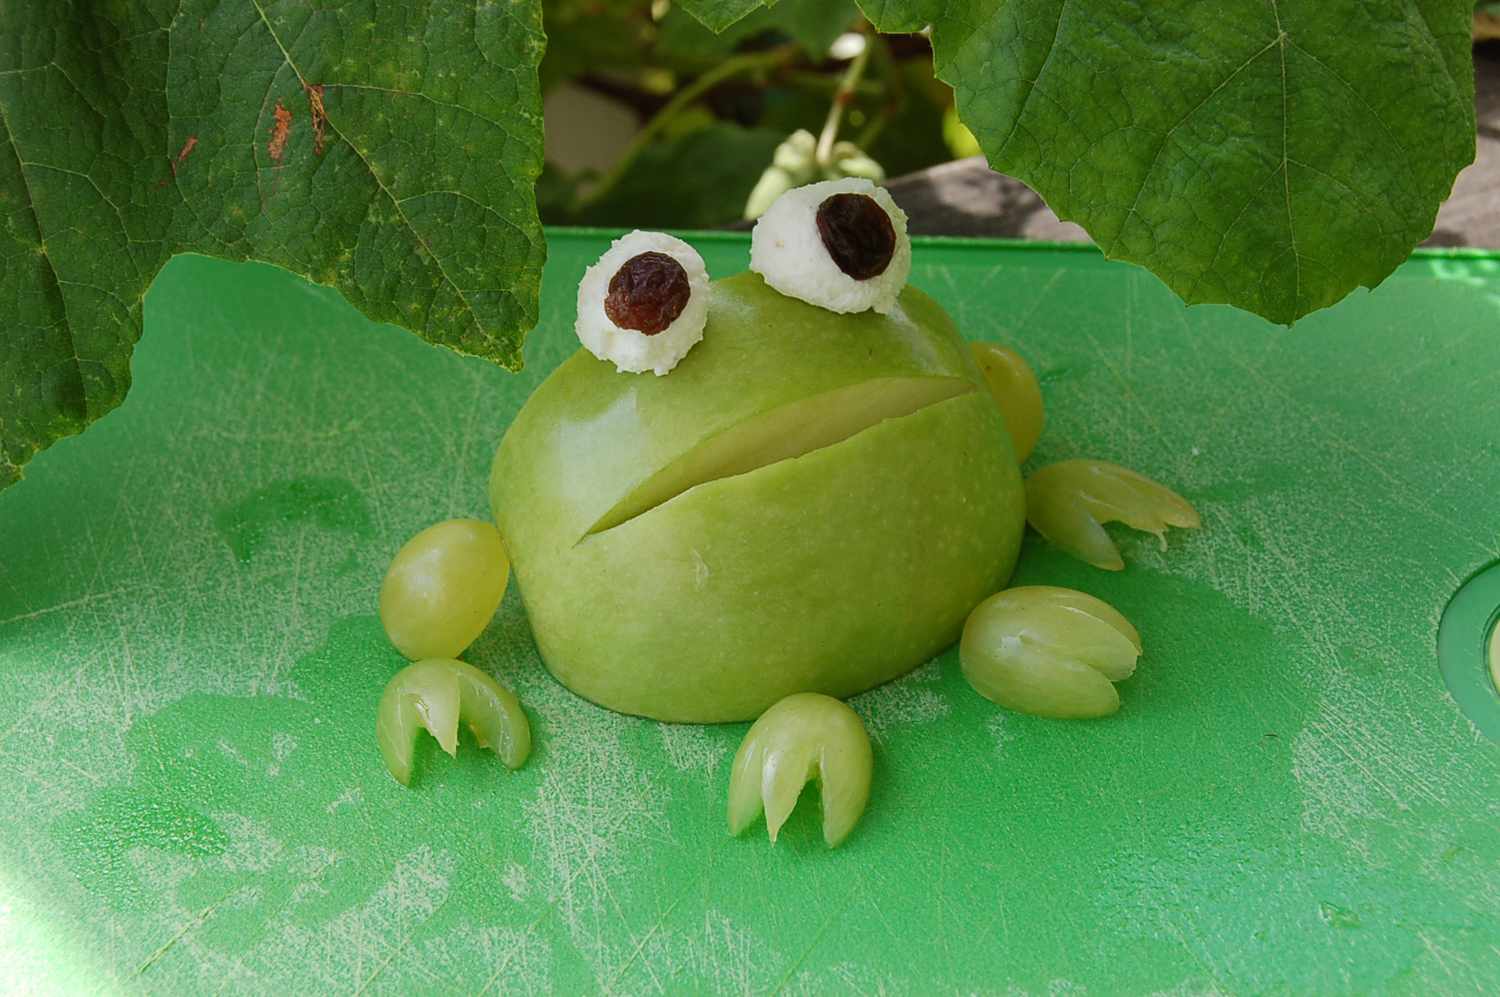 Apple Frog for Kids